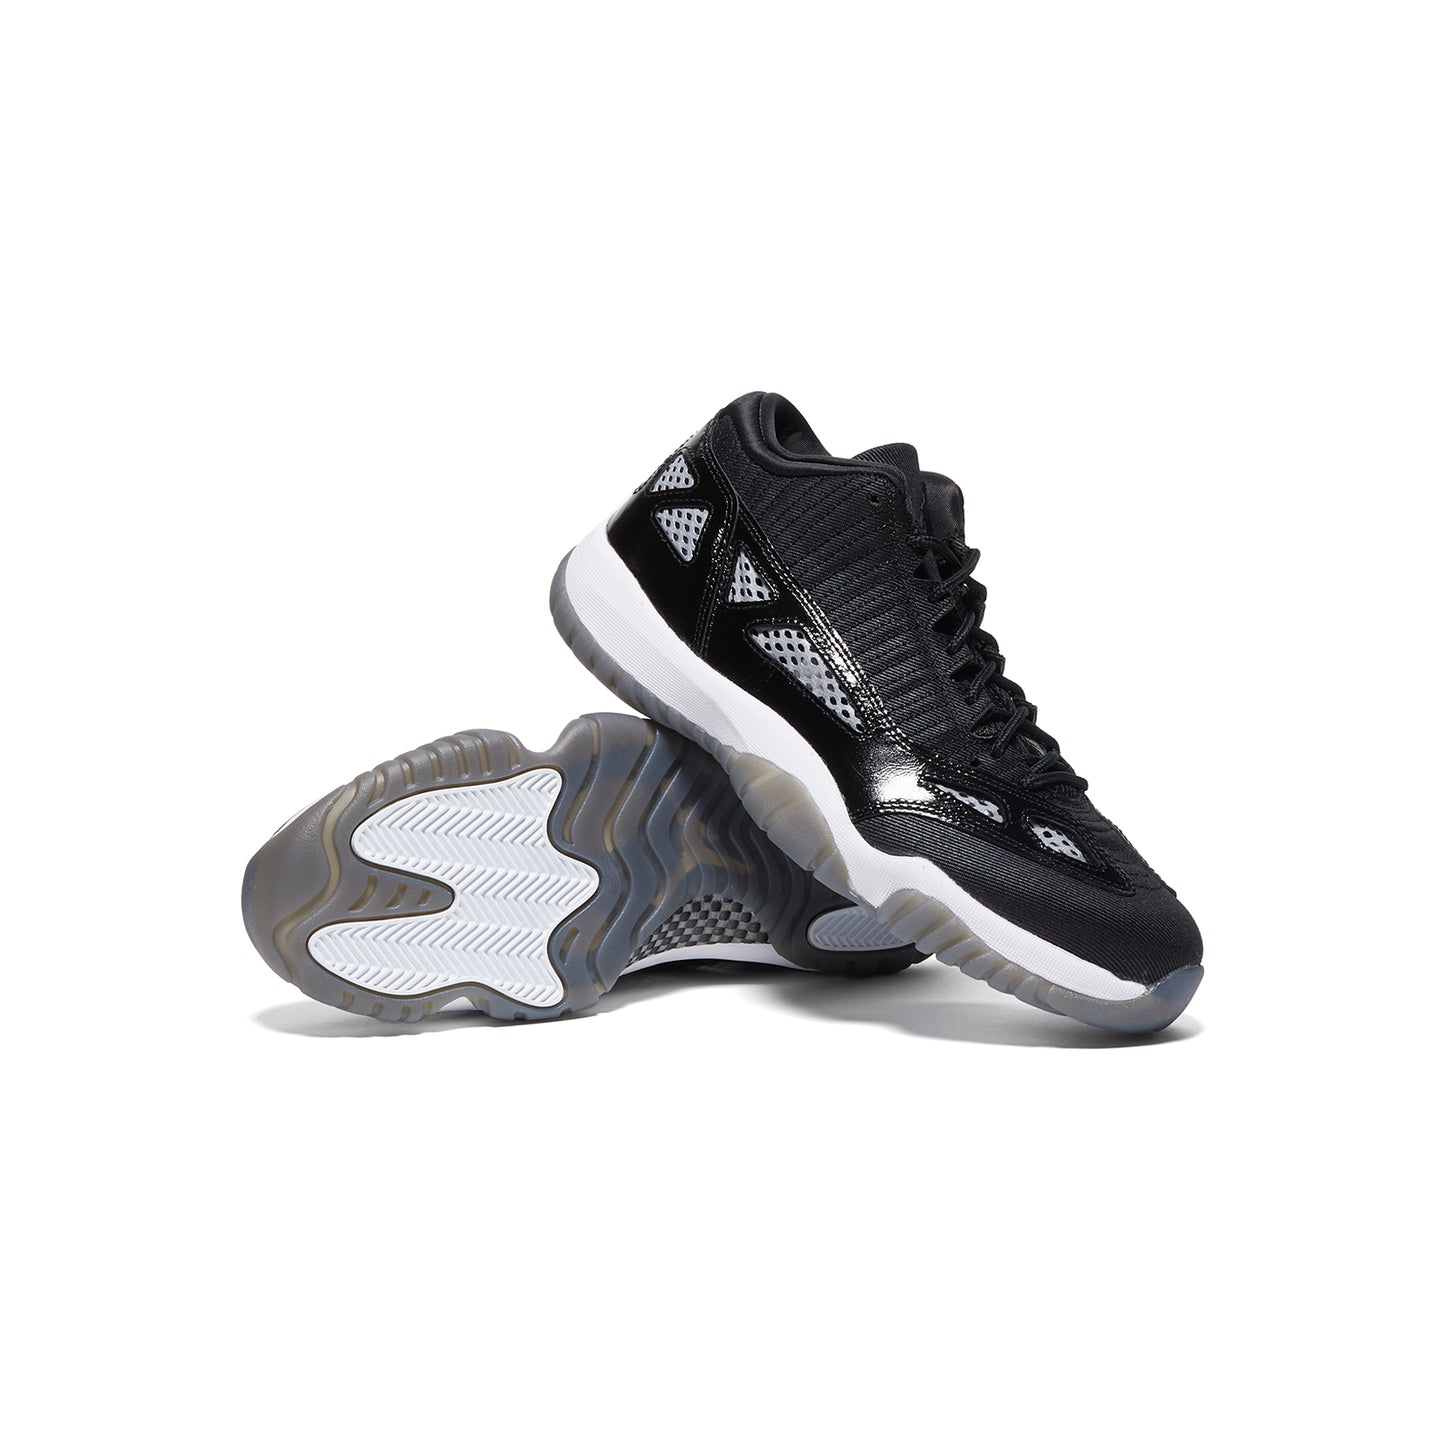 Nike Air Jordan 11 Retro Low IE (Black/White)